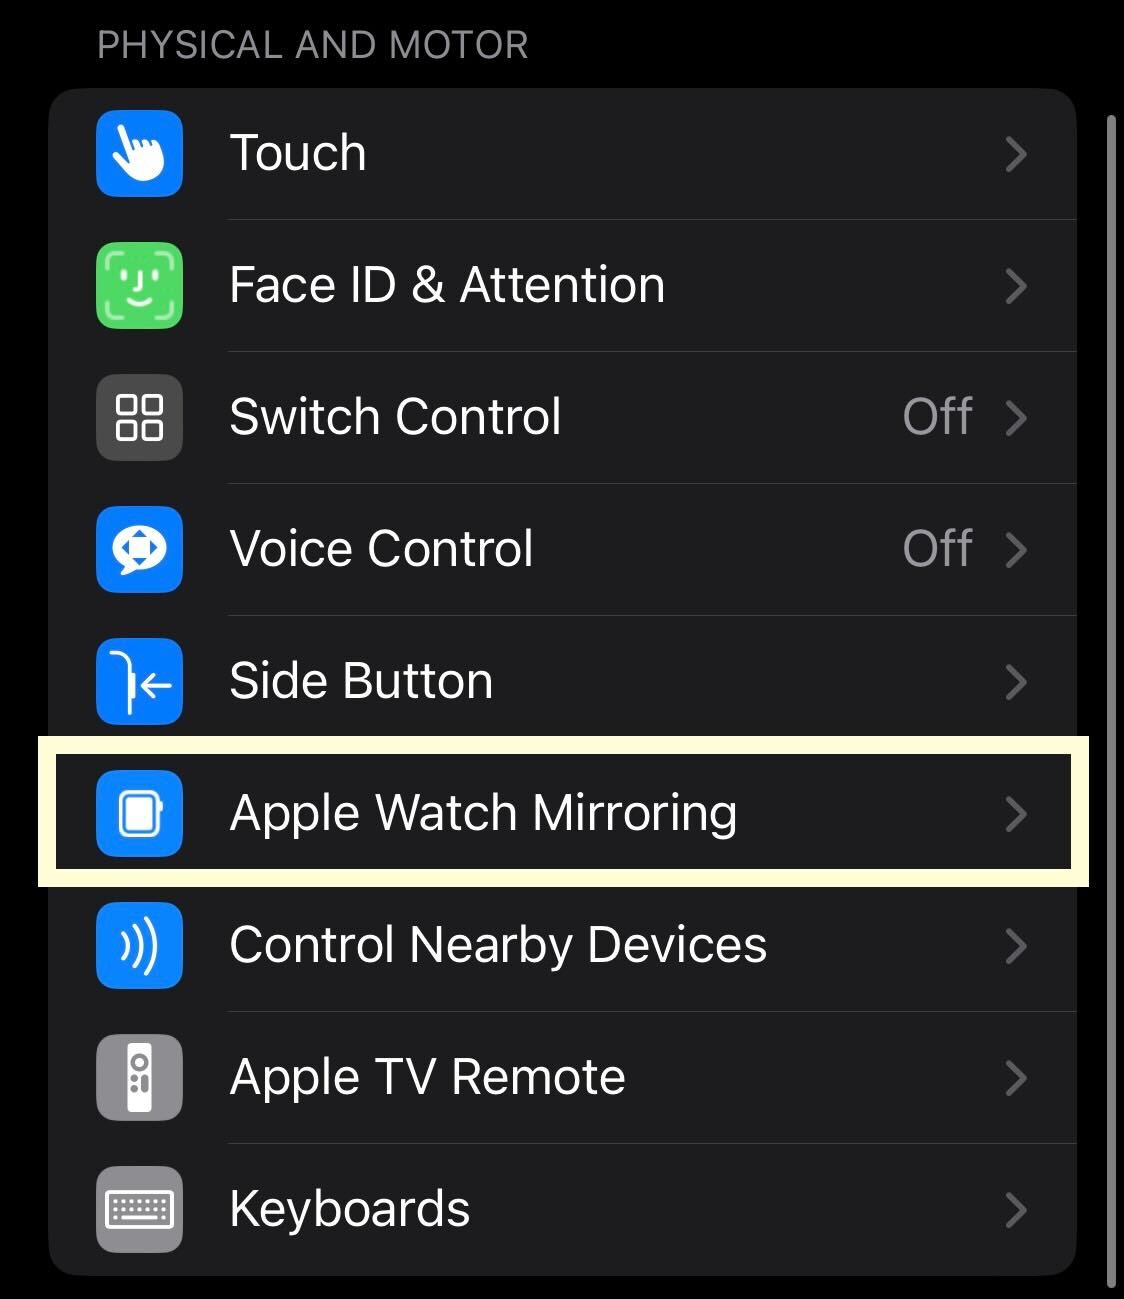 Apple Watch Mirroing button